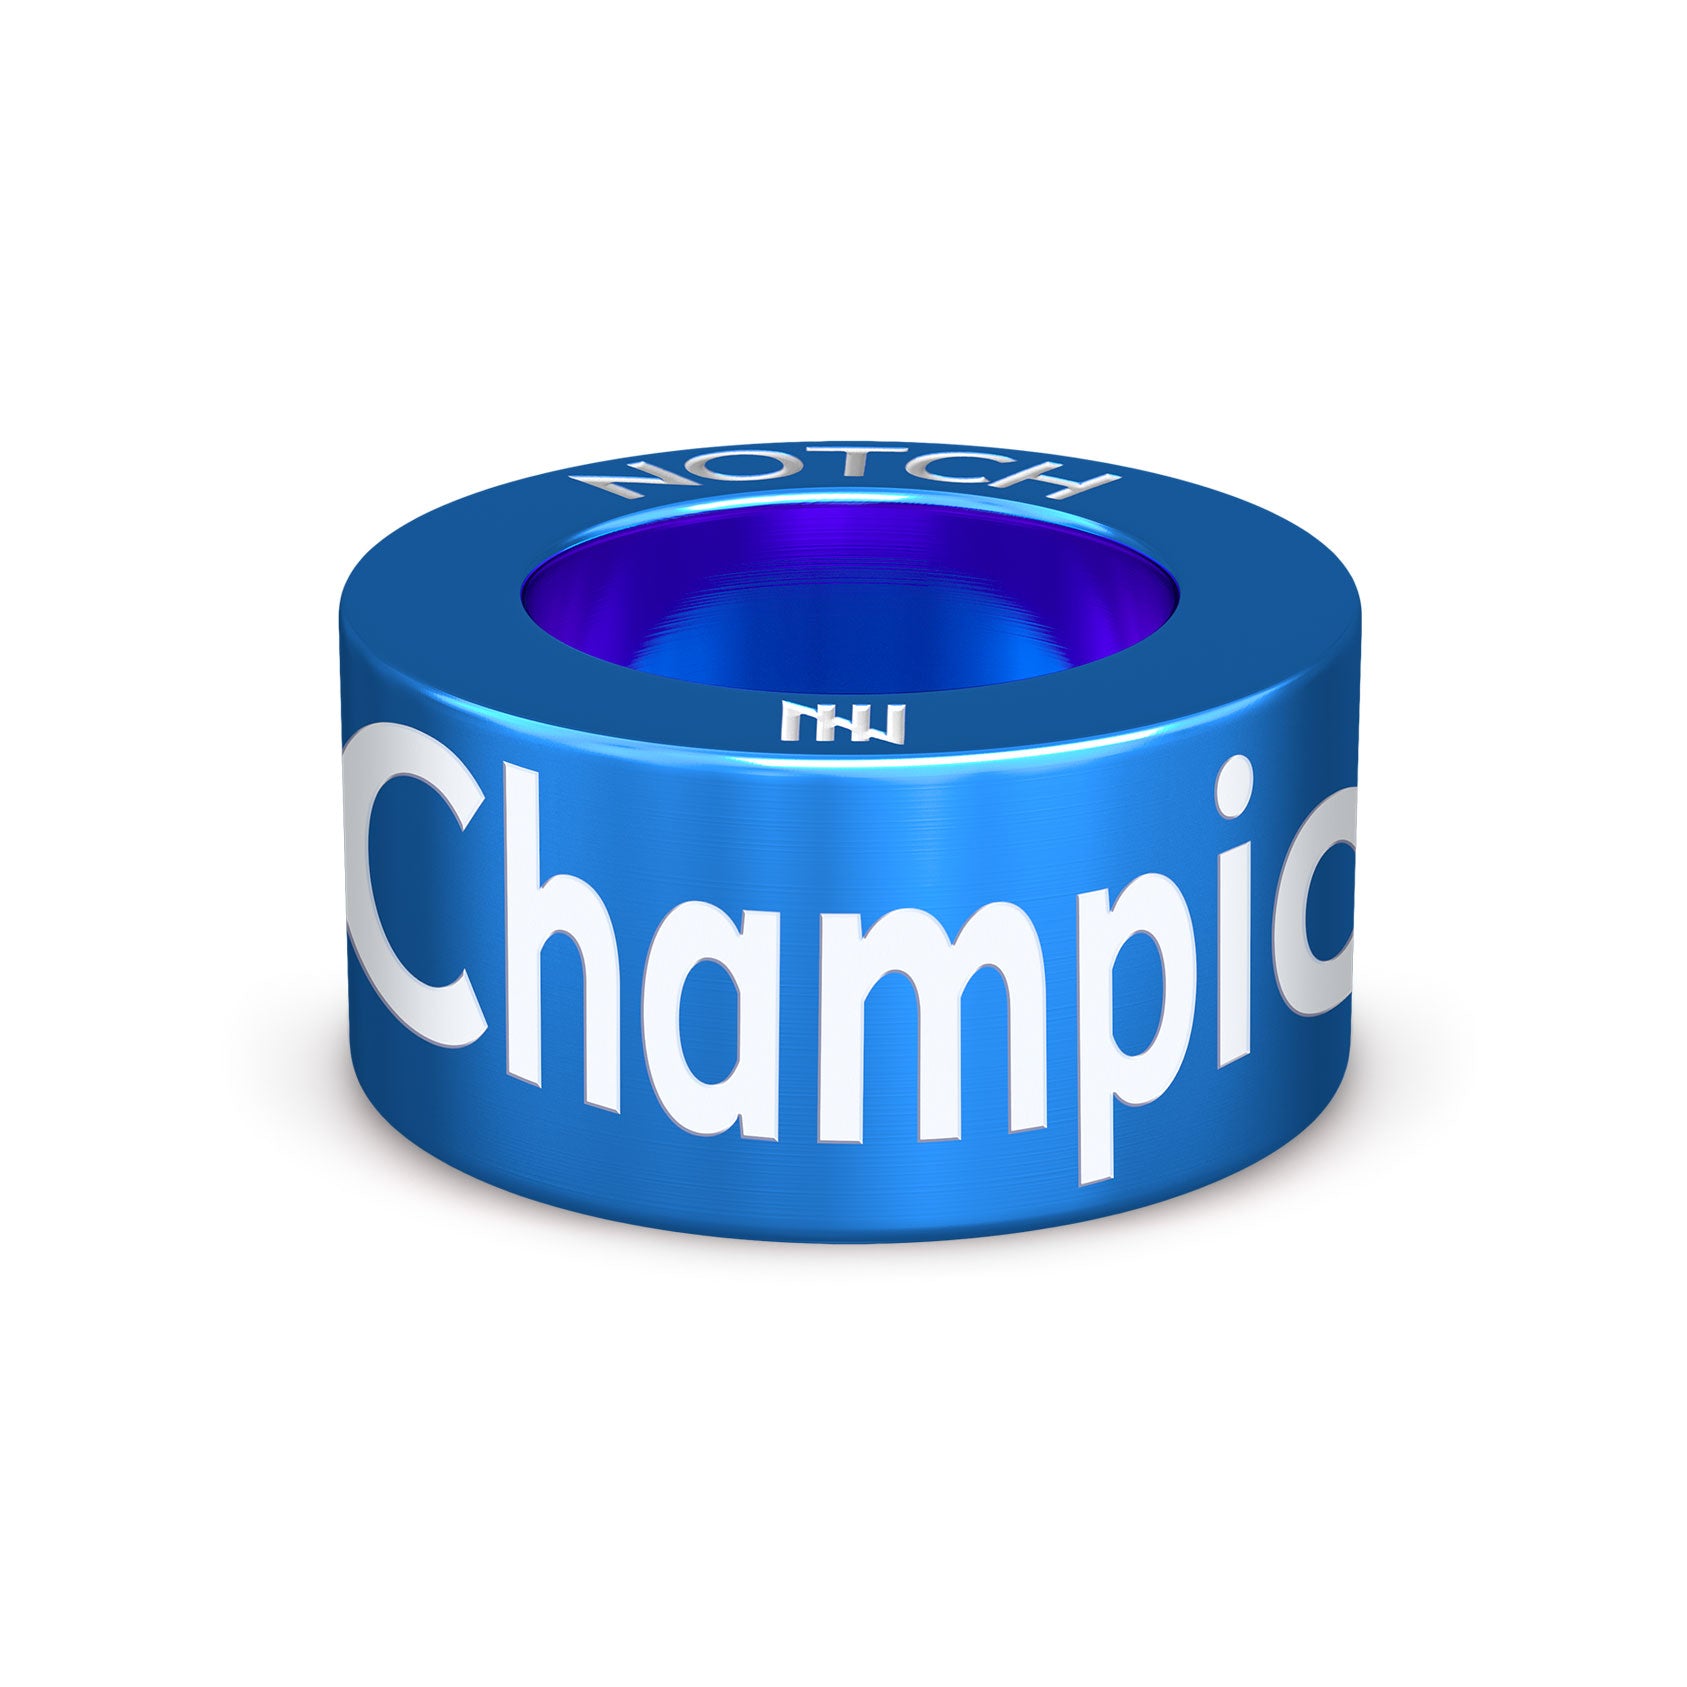 Scottish Championship Team NOTCH Charm (Full List)